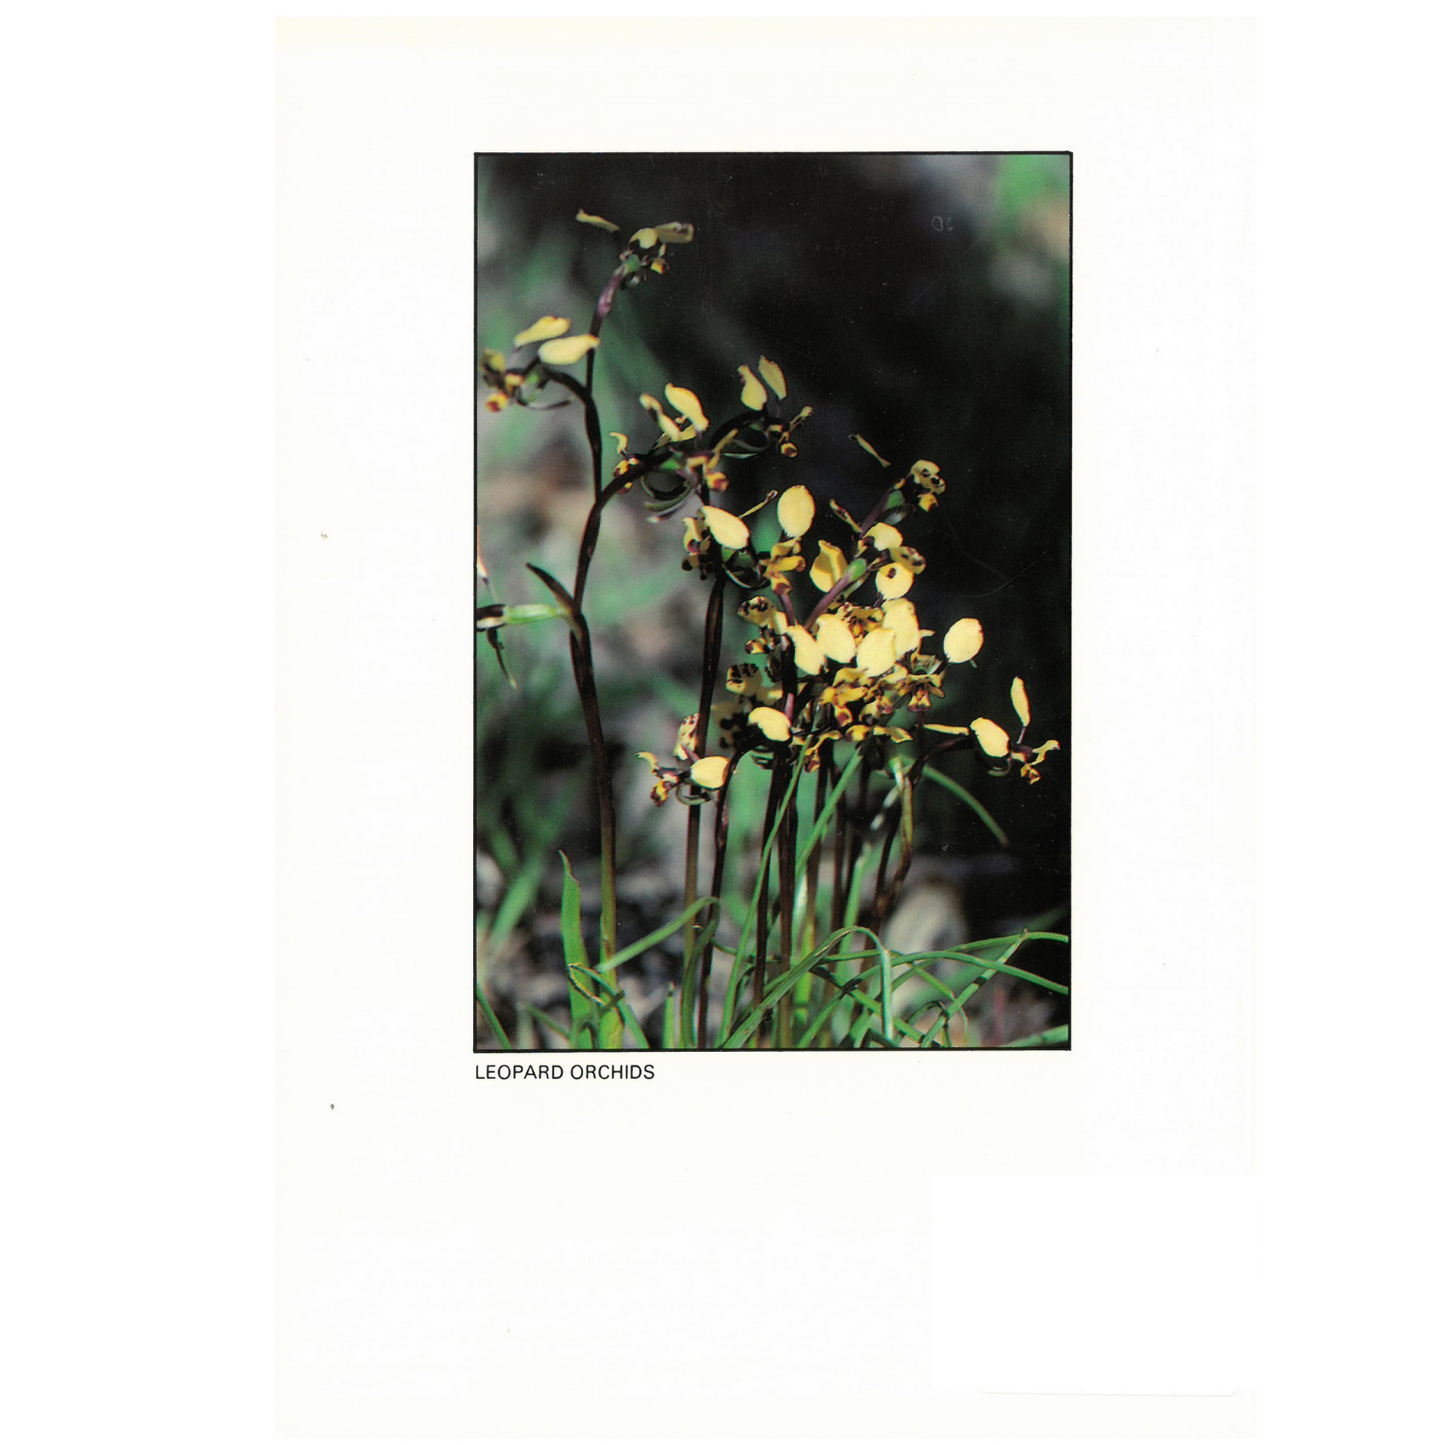 Field Naturalists -The Orchids of Bendigo